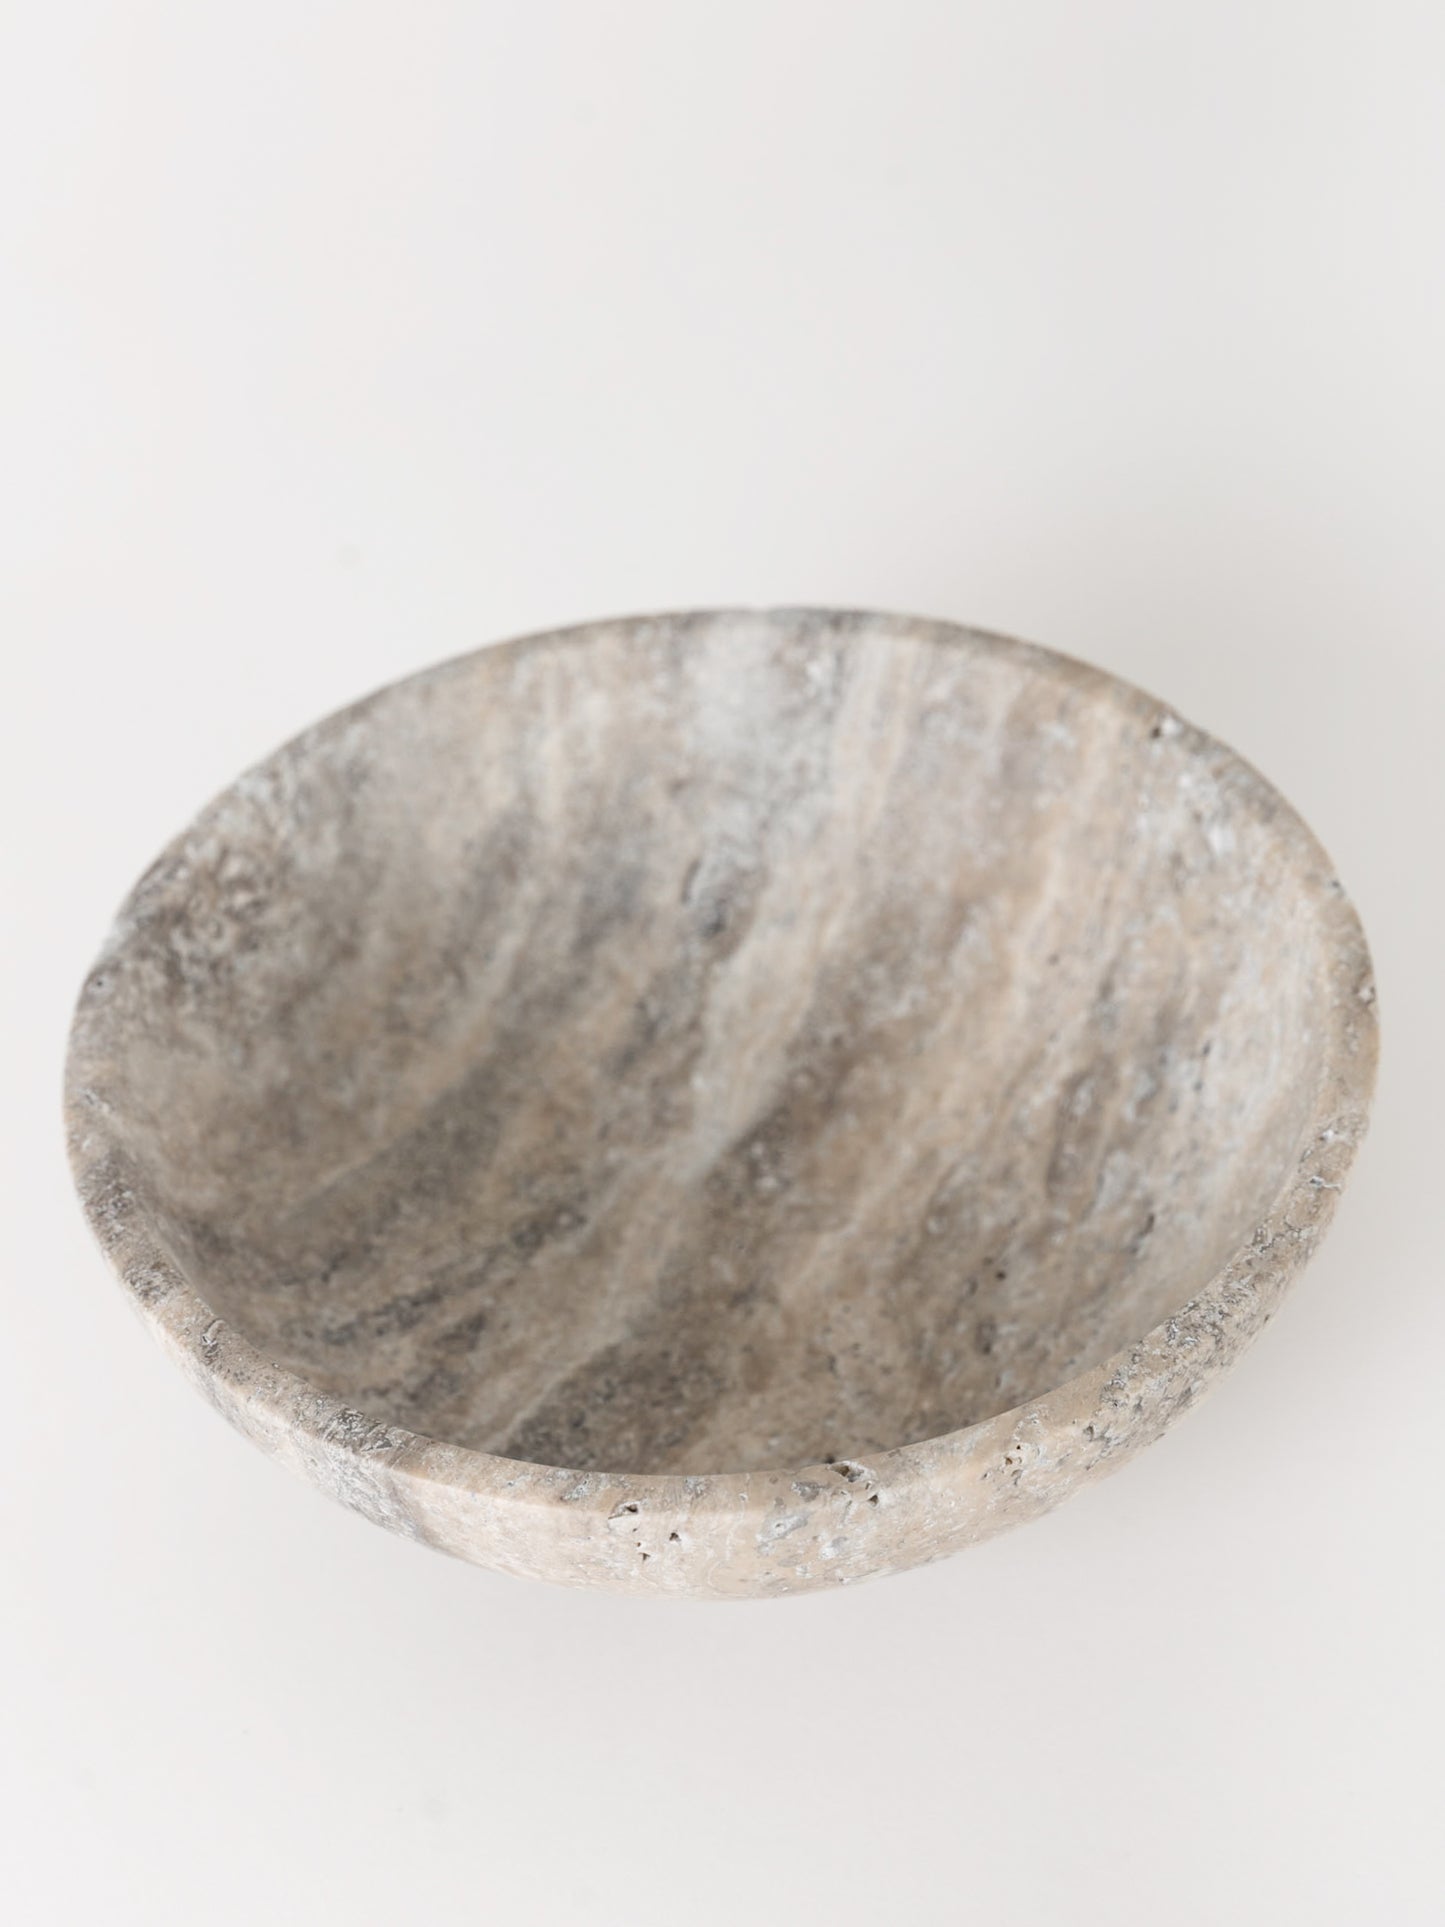 Medium Bowl, Gray Travertine Marble